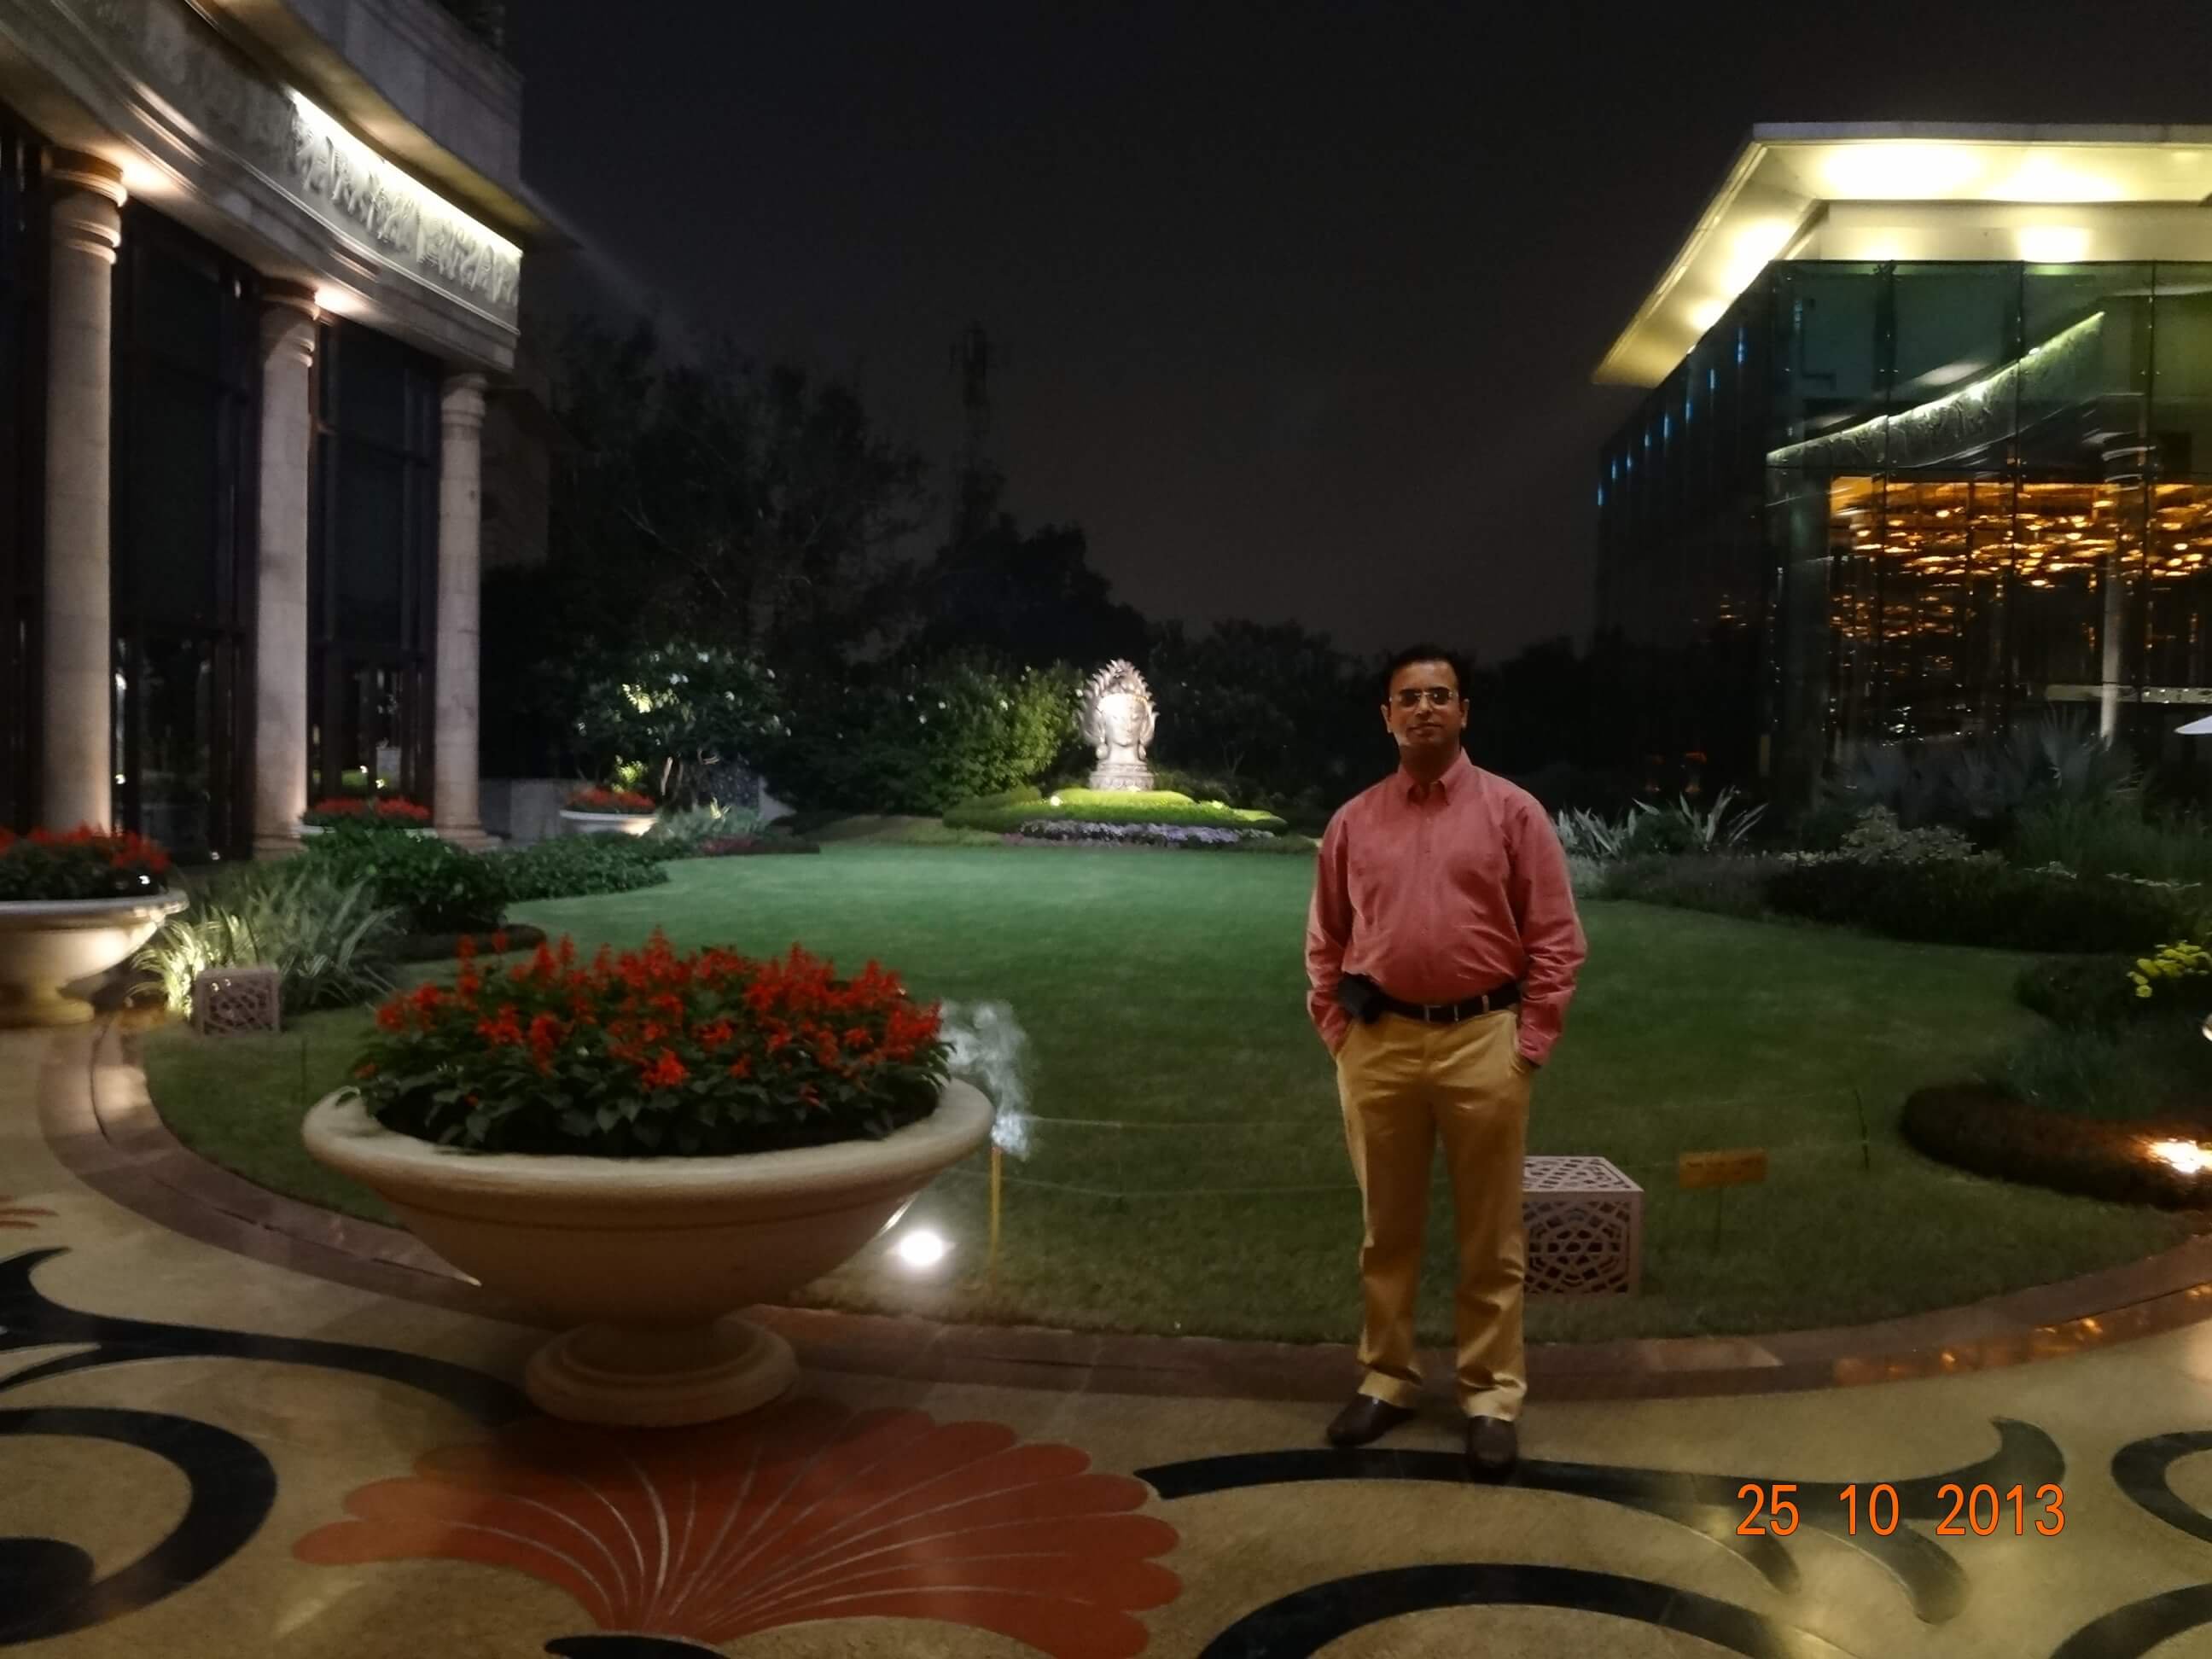 The Leela Palace, New Delhi